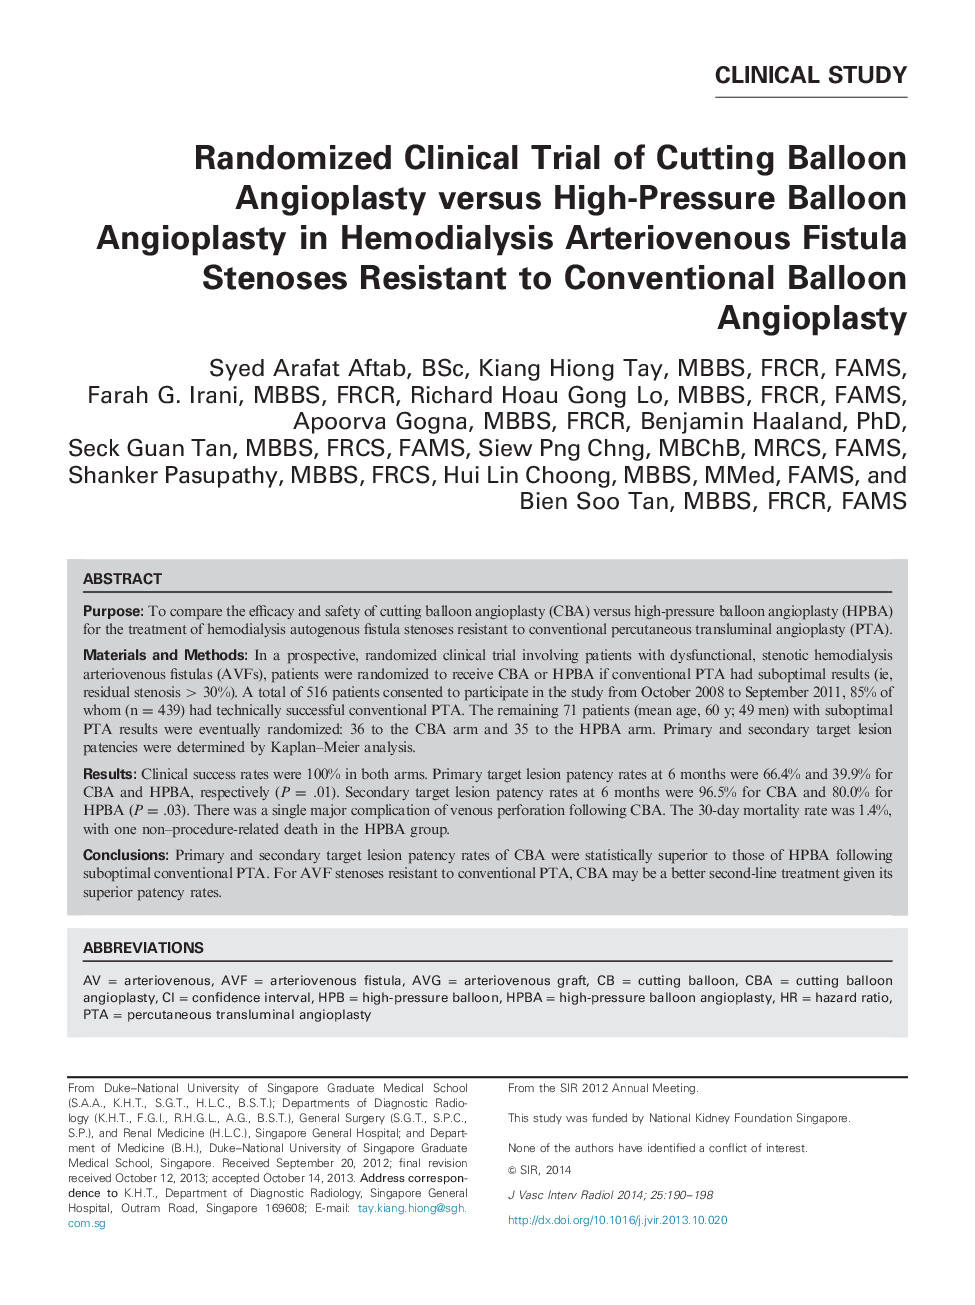 Randomized Clinical Trial of Cutting Balloon Angioplasty versus High-Pressure Balloon Angioplasty in Hemodialysis Arteriovenous Fistula Stenoses Resistant to Conventional Balloon Angioplasty